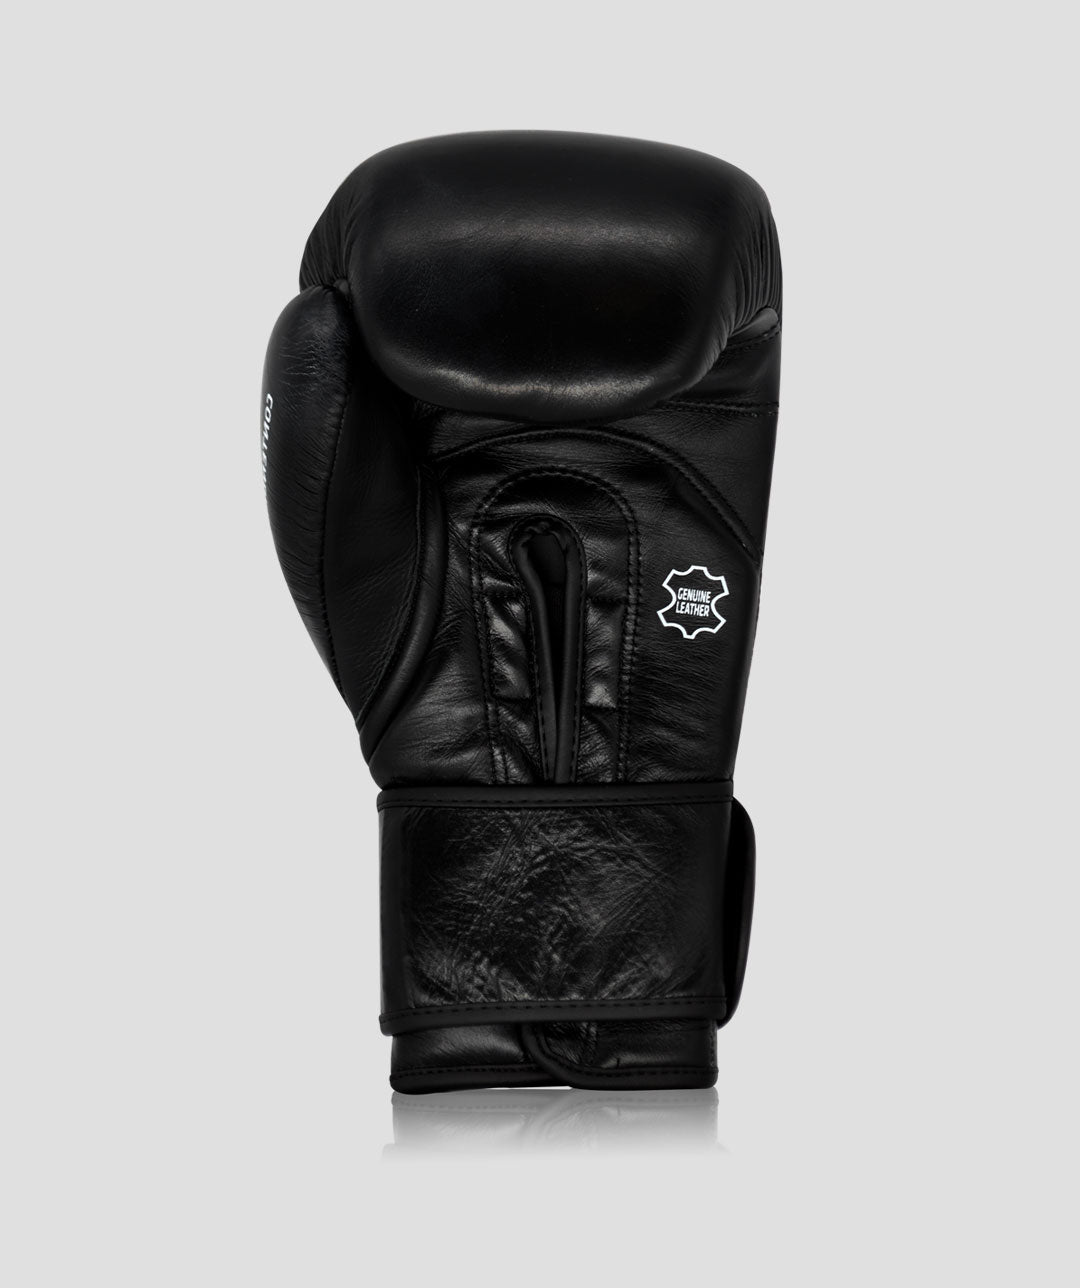 Contender Sparring Boxing Gloves - Strap